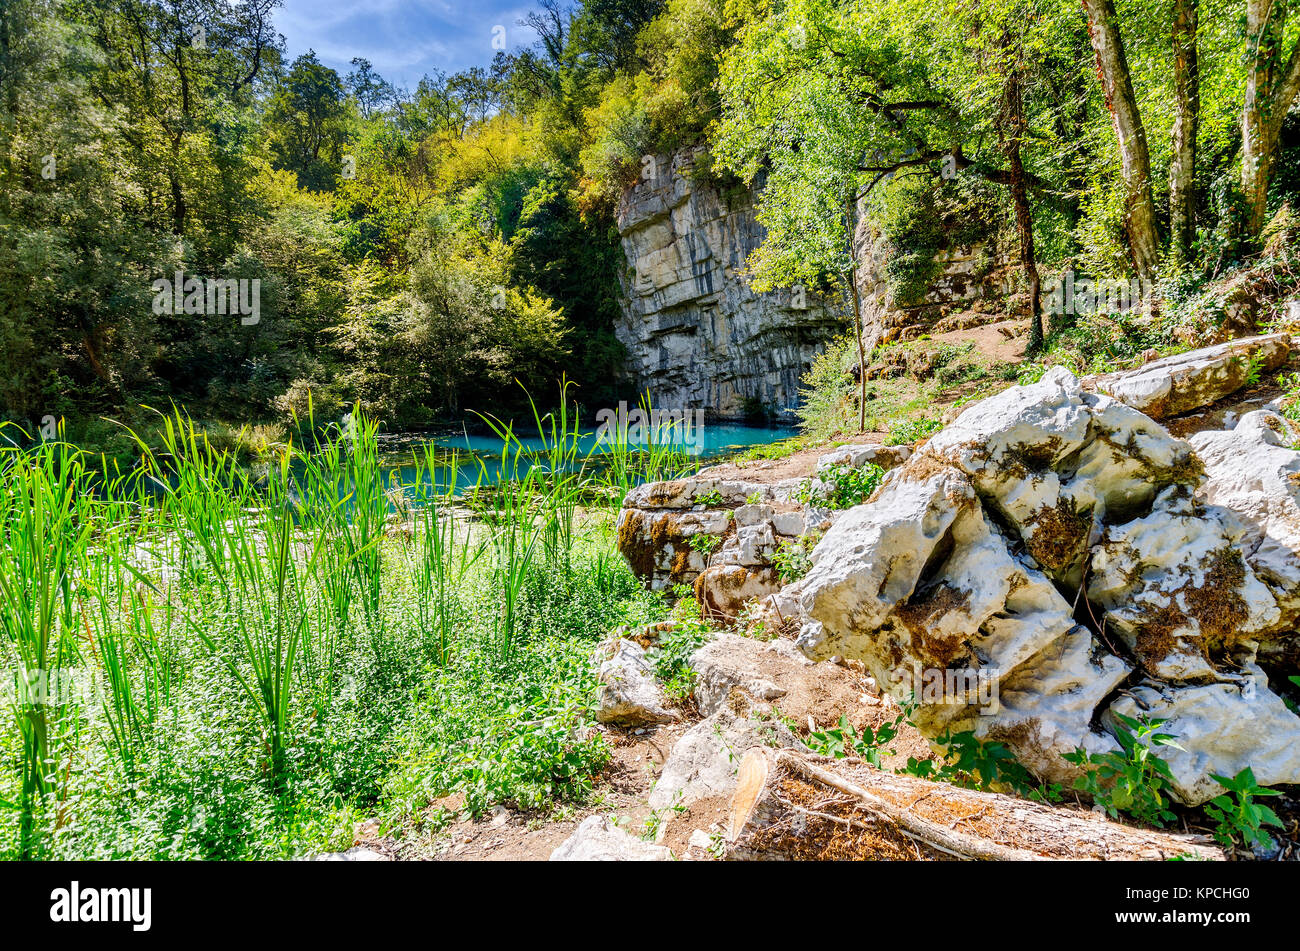 Krupa river source, Bela Krajina (White Carniola) region in Slovenia, Europe. Stock Photo